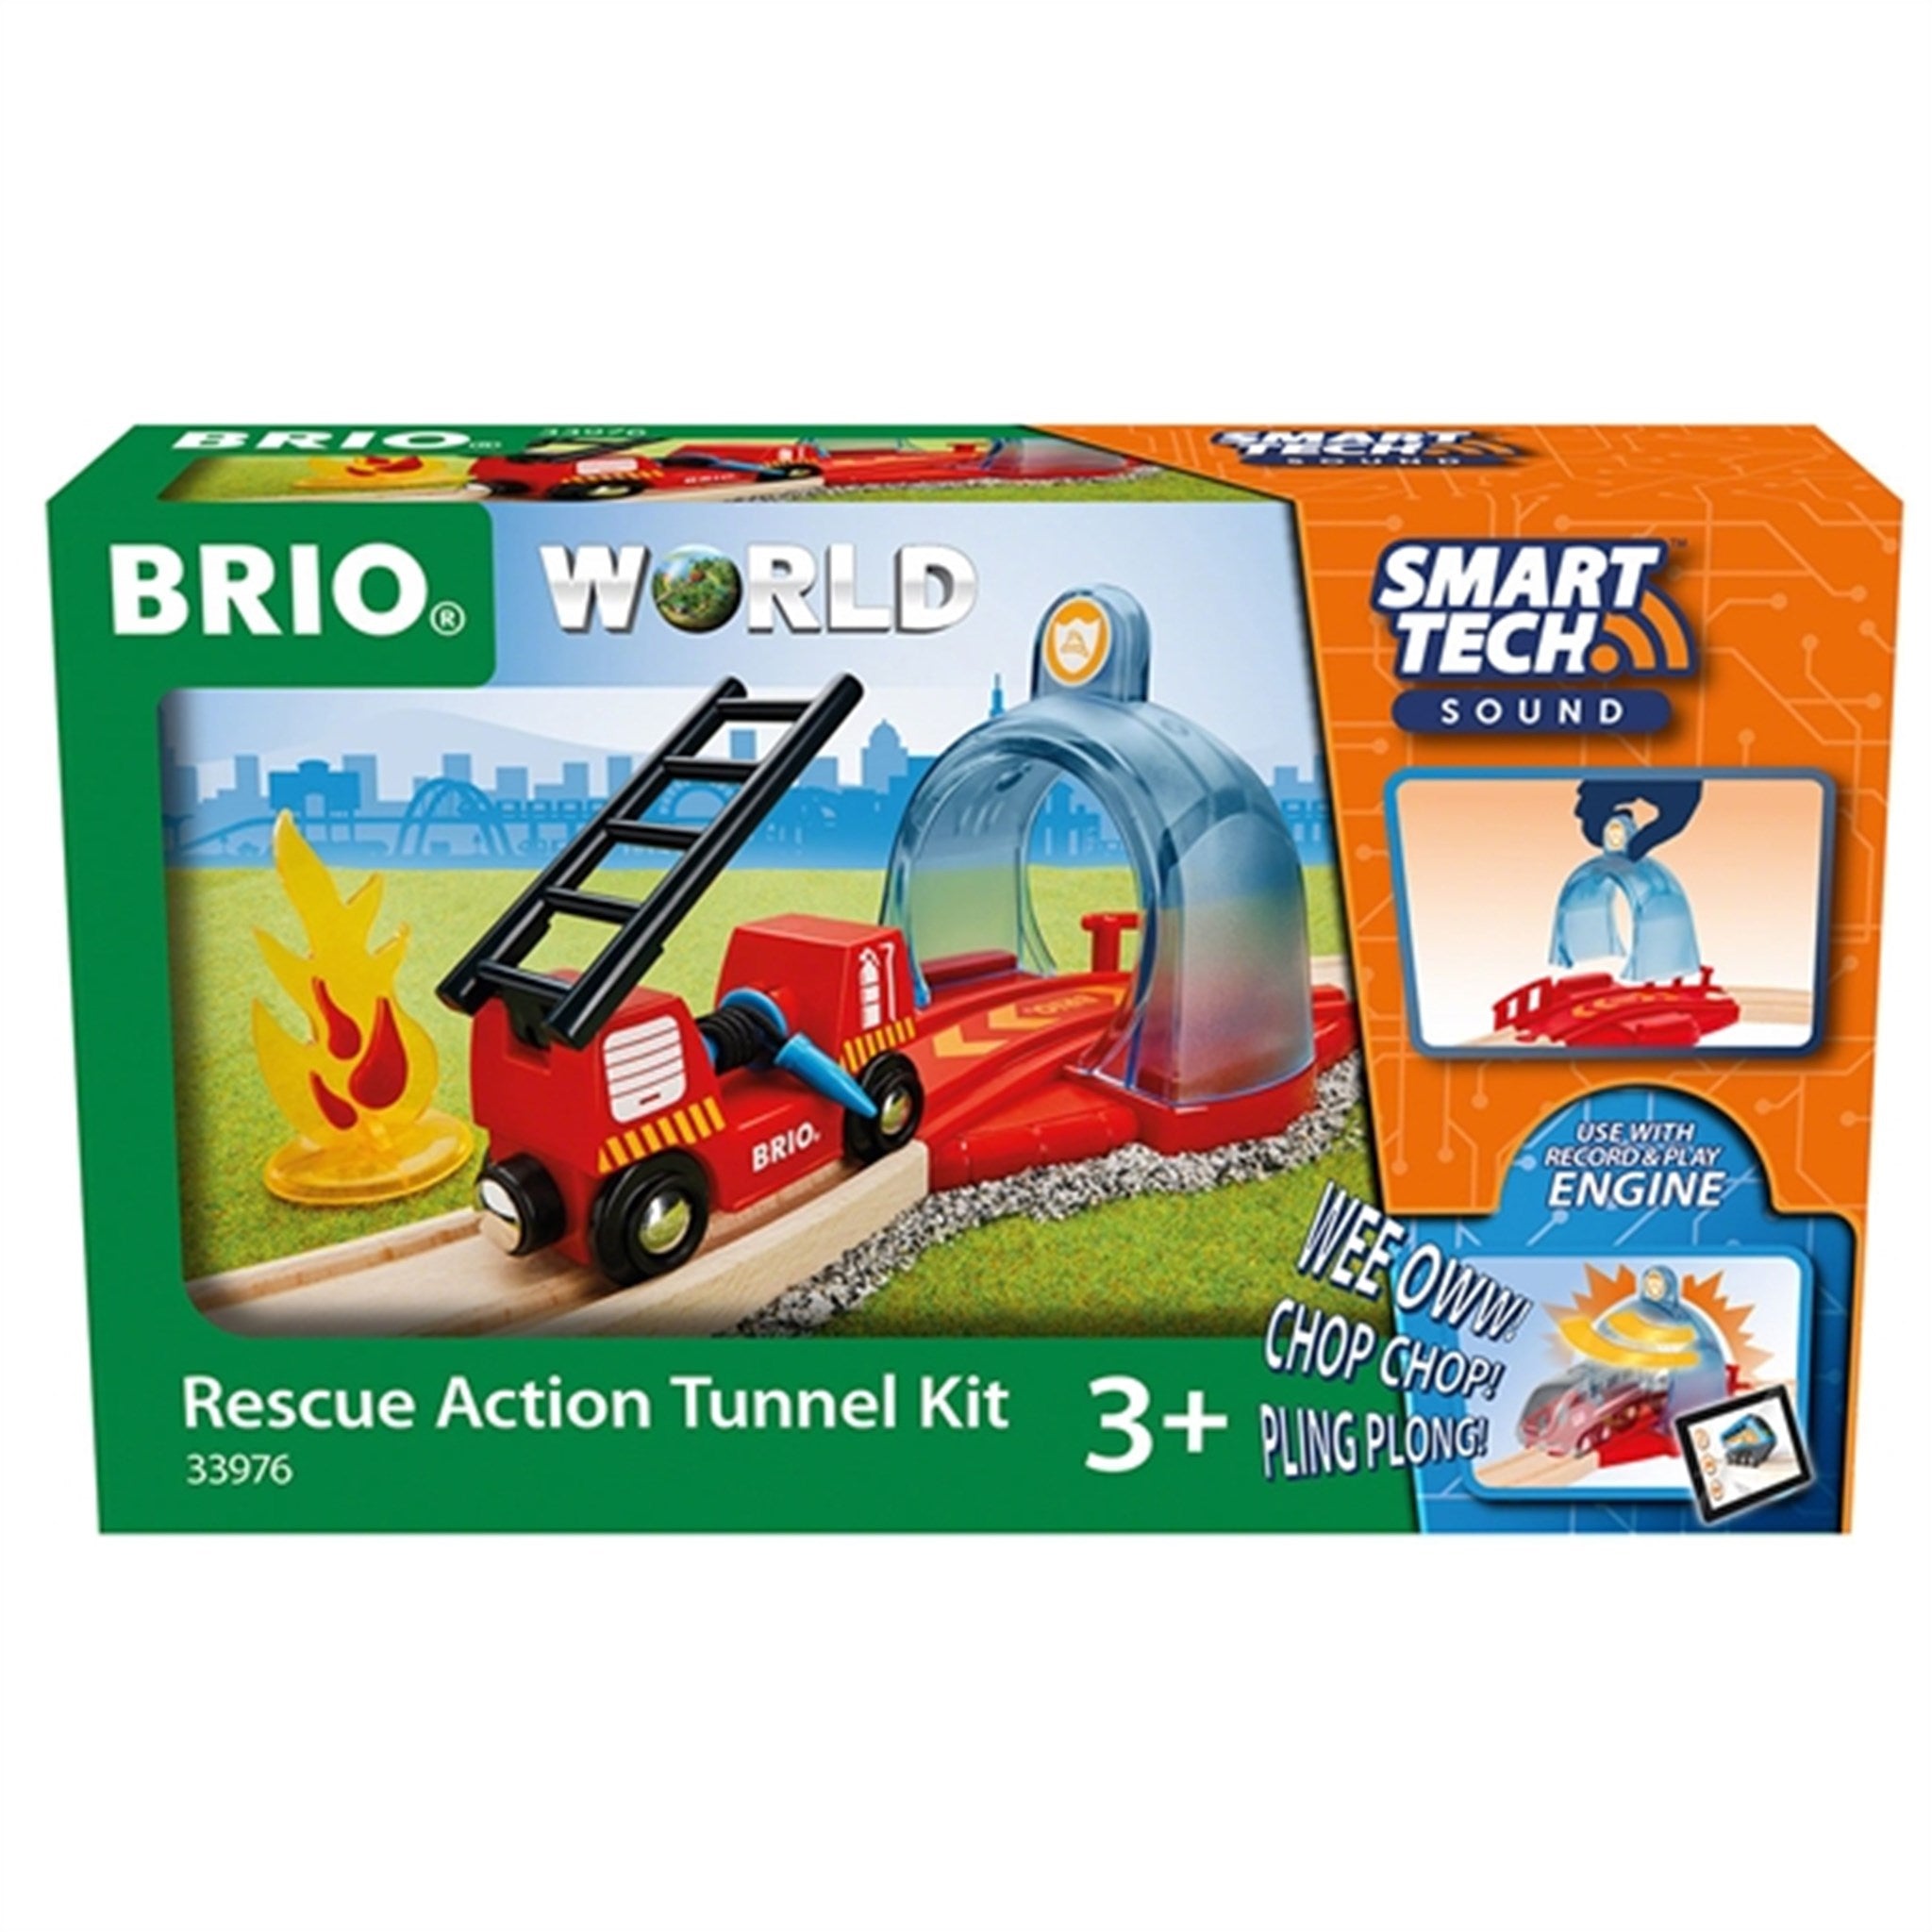 BRIO® Smart Tech Sound Rascue Action Tunnel Kit 2